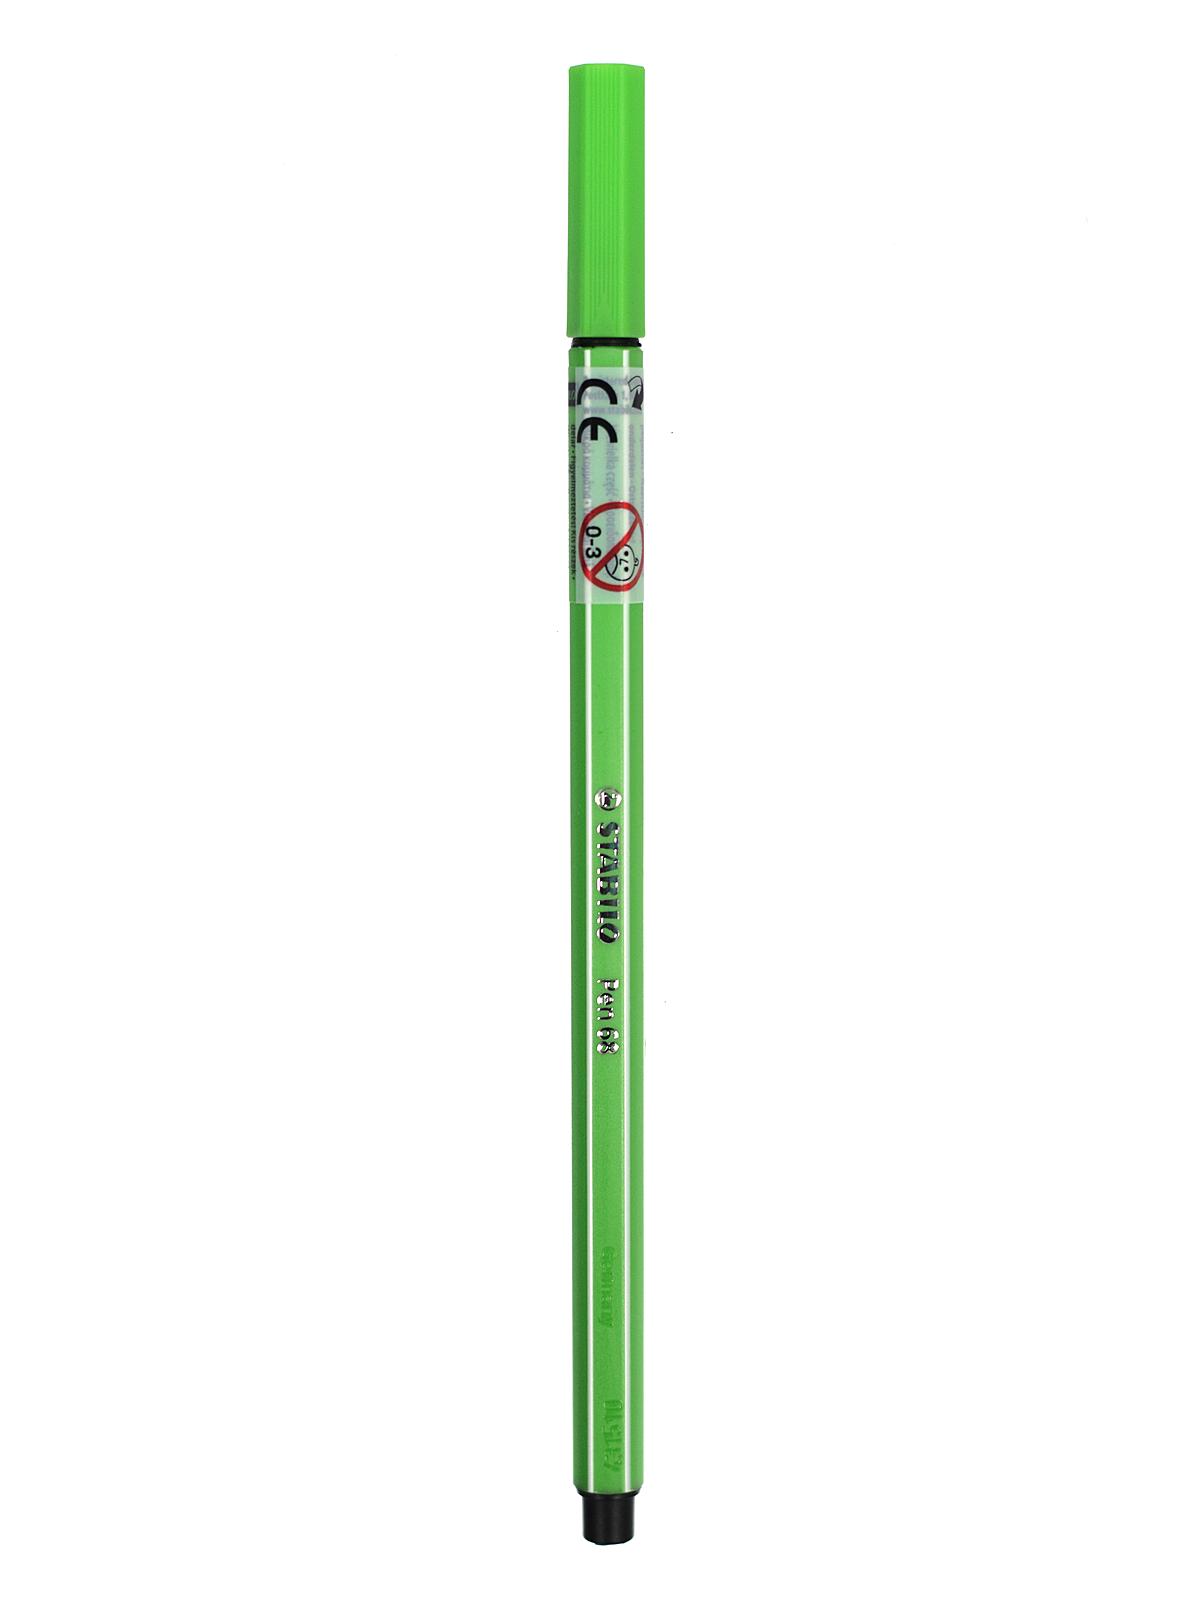 Pen 68 Markers Leaf Green